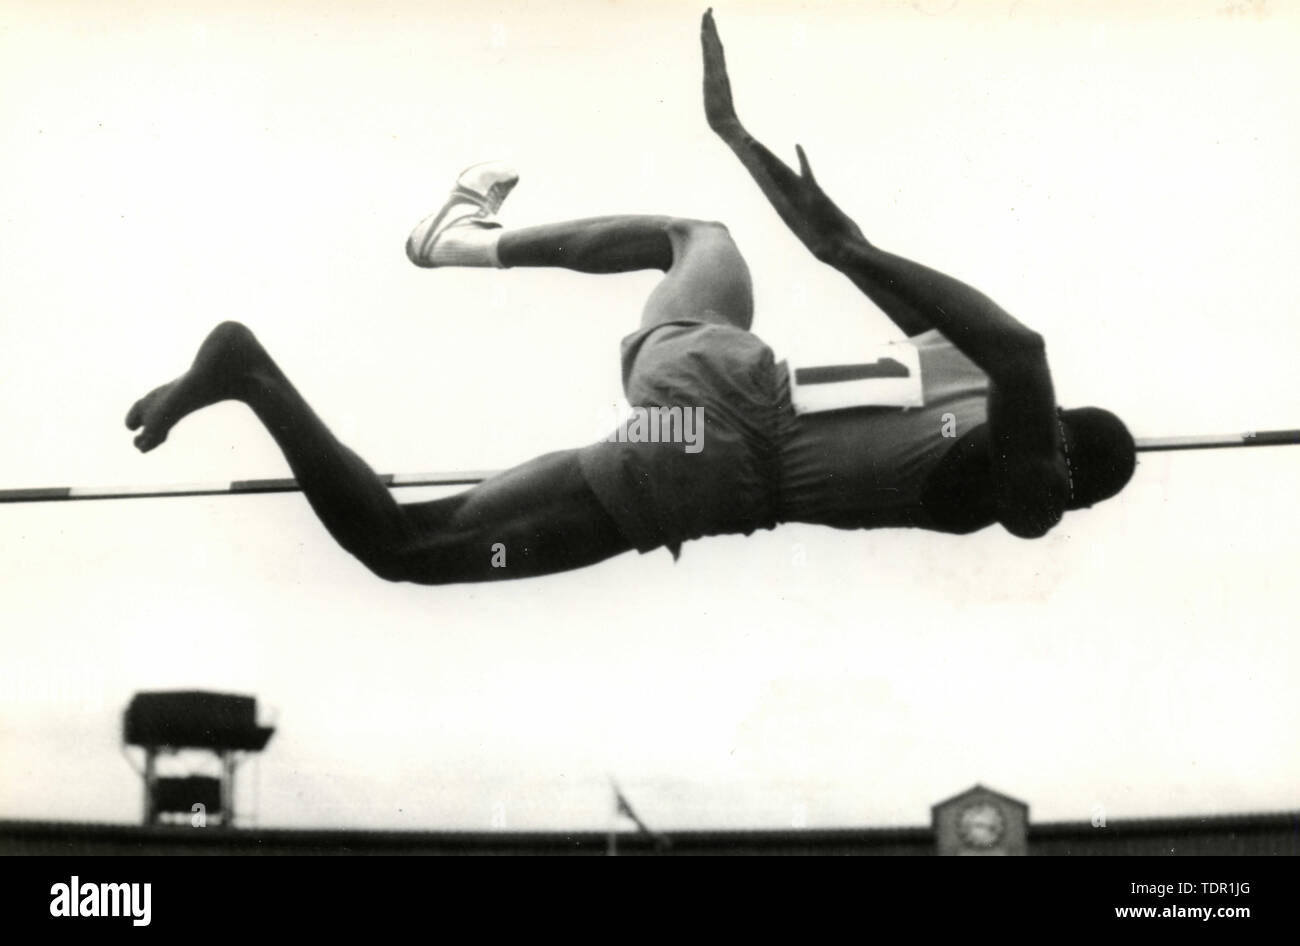 Jumper Leaps Idriss, Olympics 1972, Munich, Germany Stock Photo